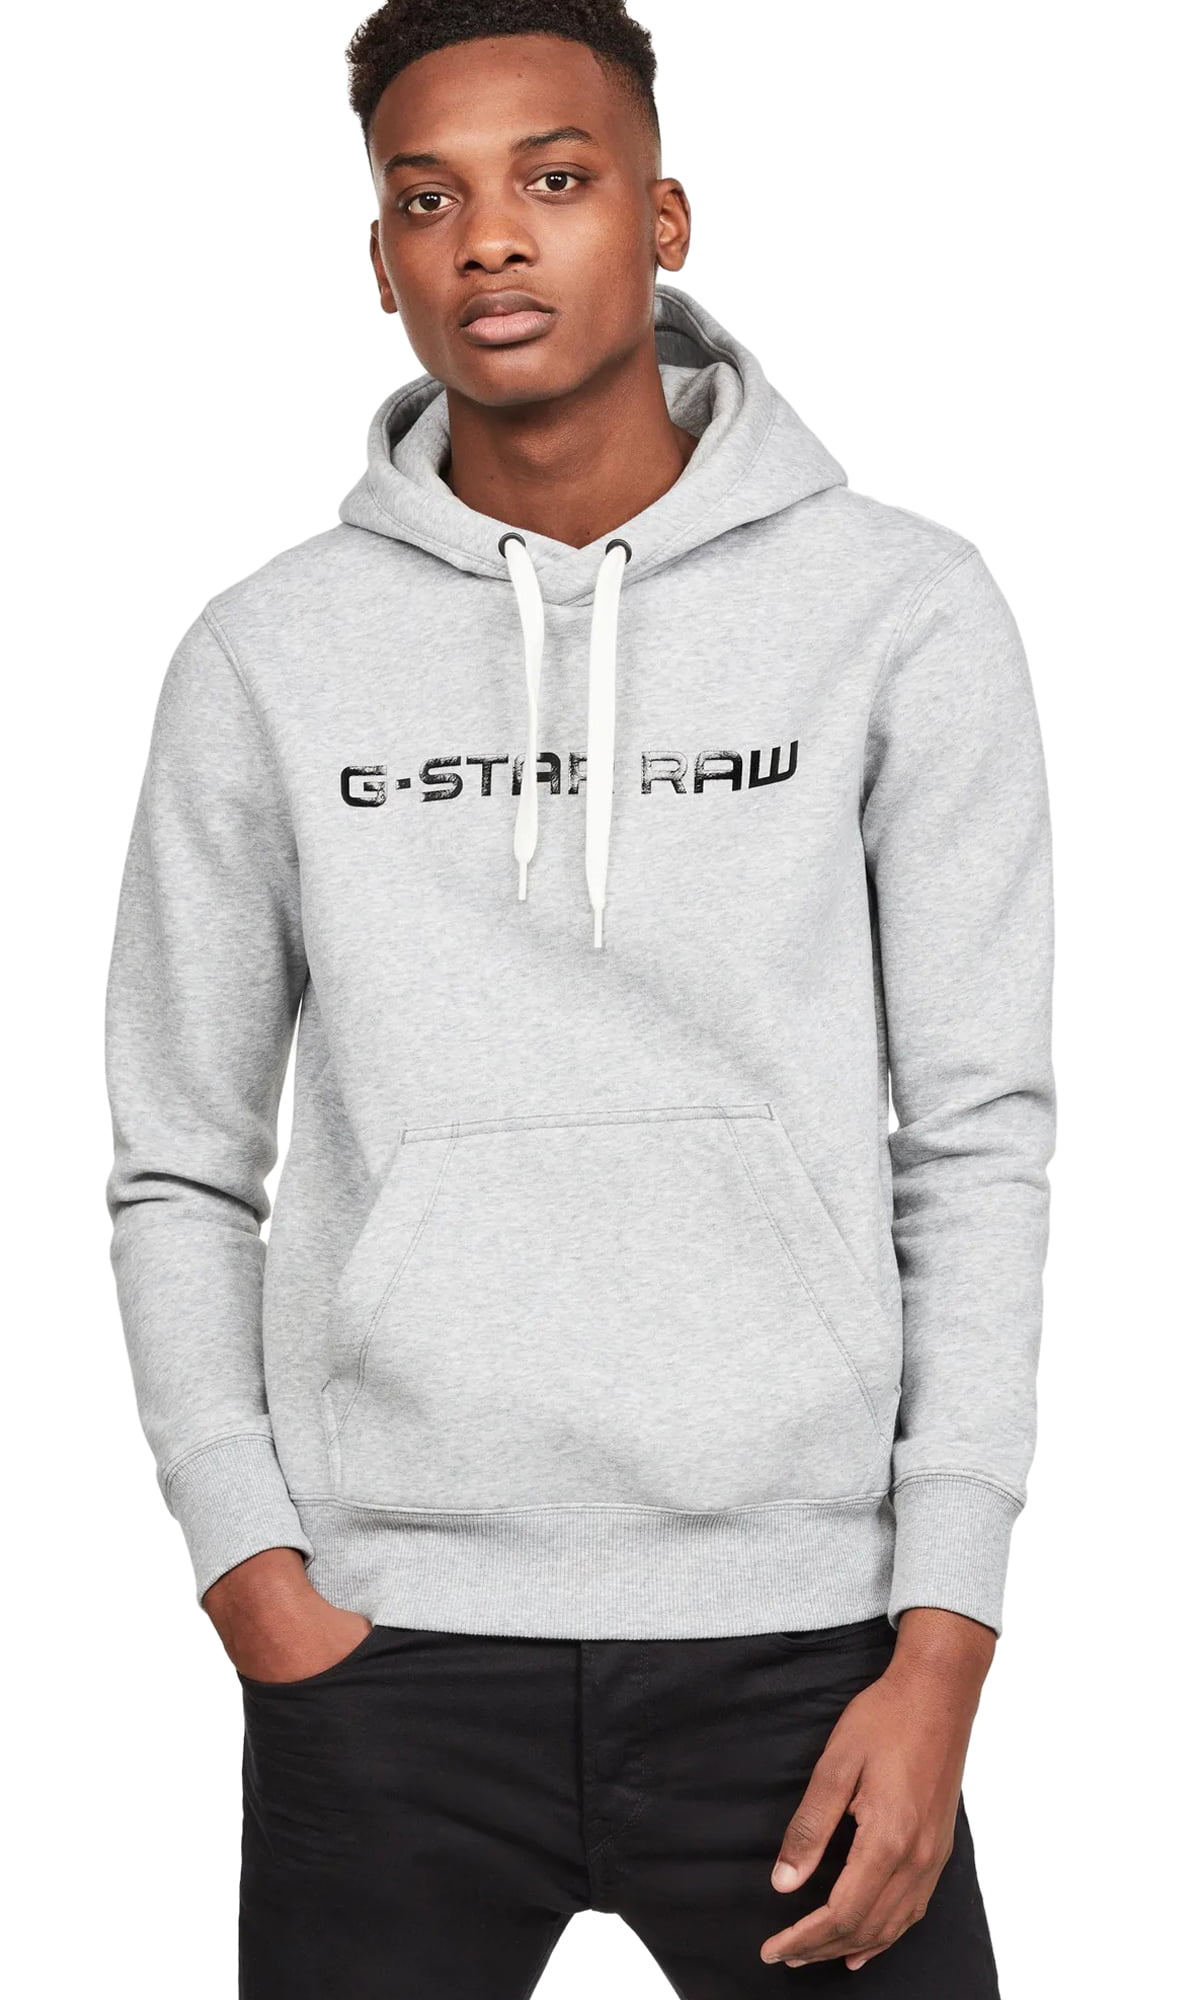 G-star - G-Star Men's Loaq Core Graphic Hoodie Sweatshirt - Walmart.com ...